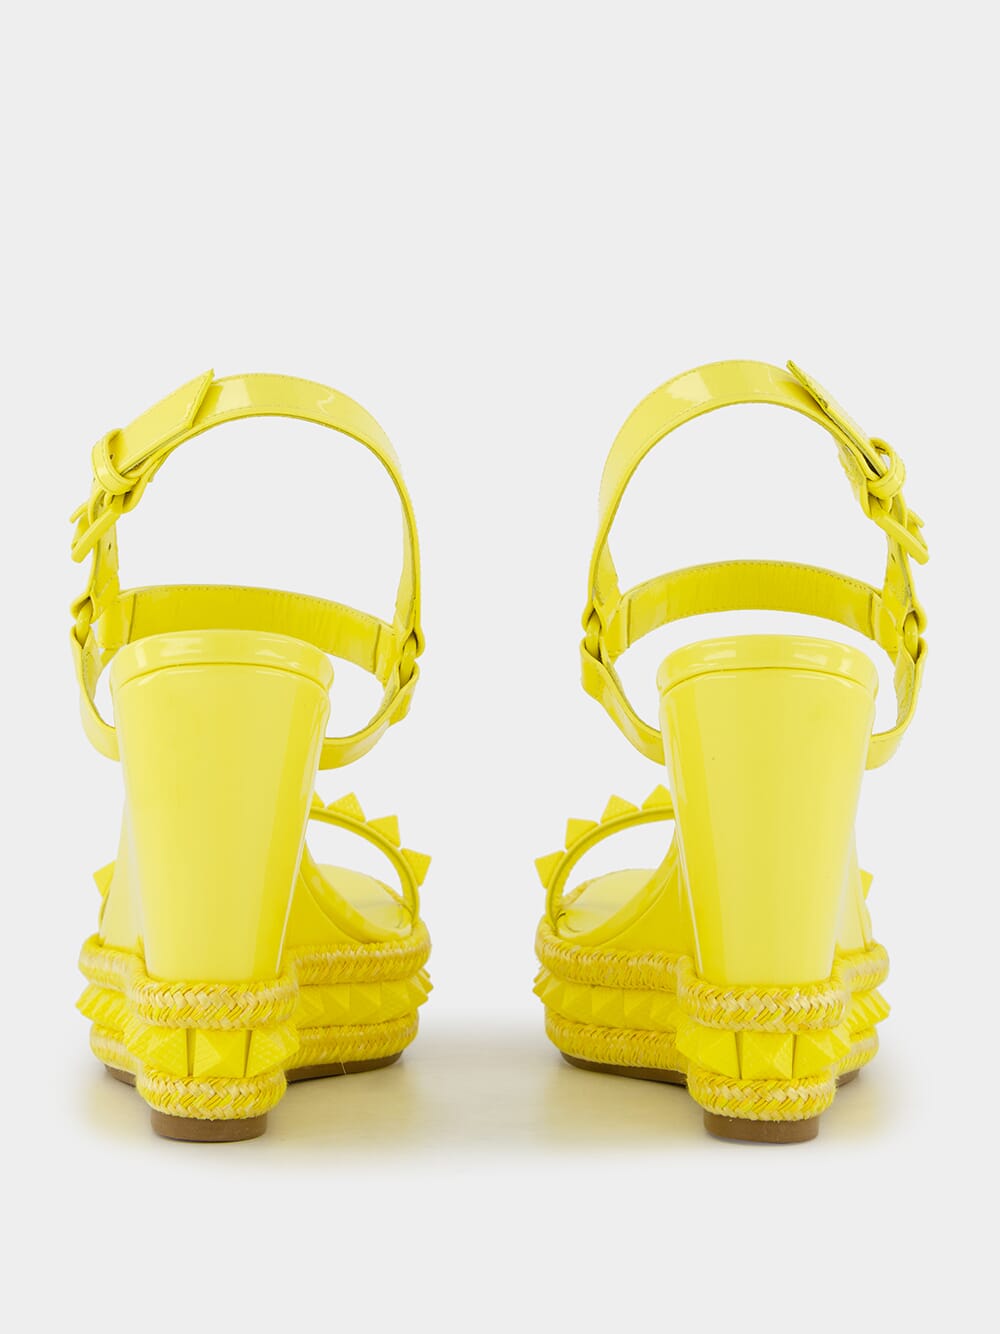 Christian Louboutin Pyraclou 110mm Studded Yellow Wedges | Fashion Clinic